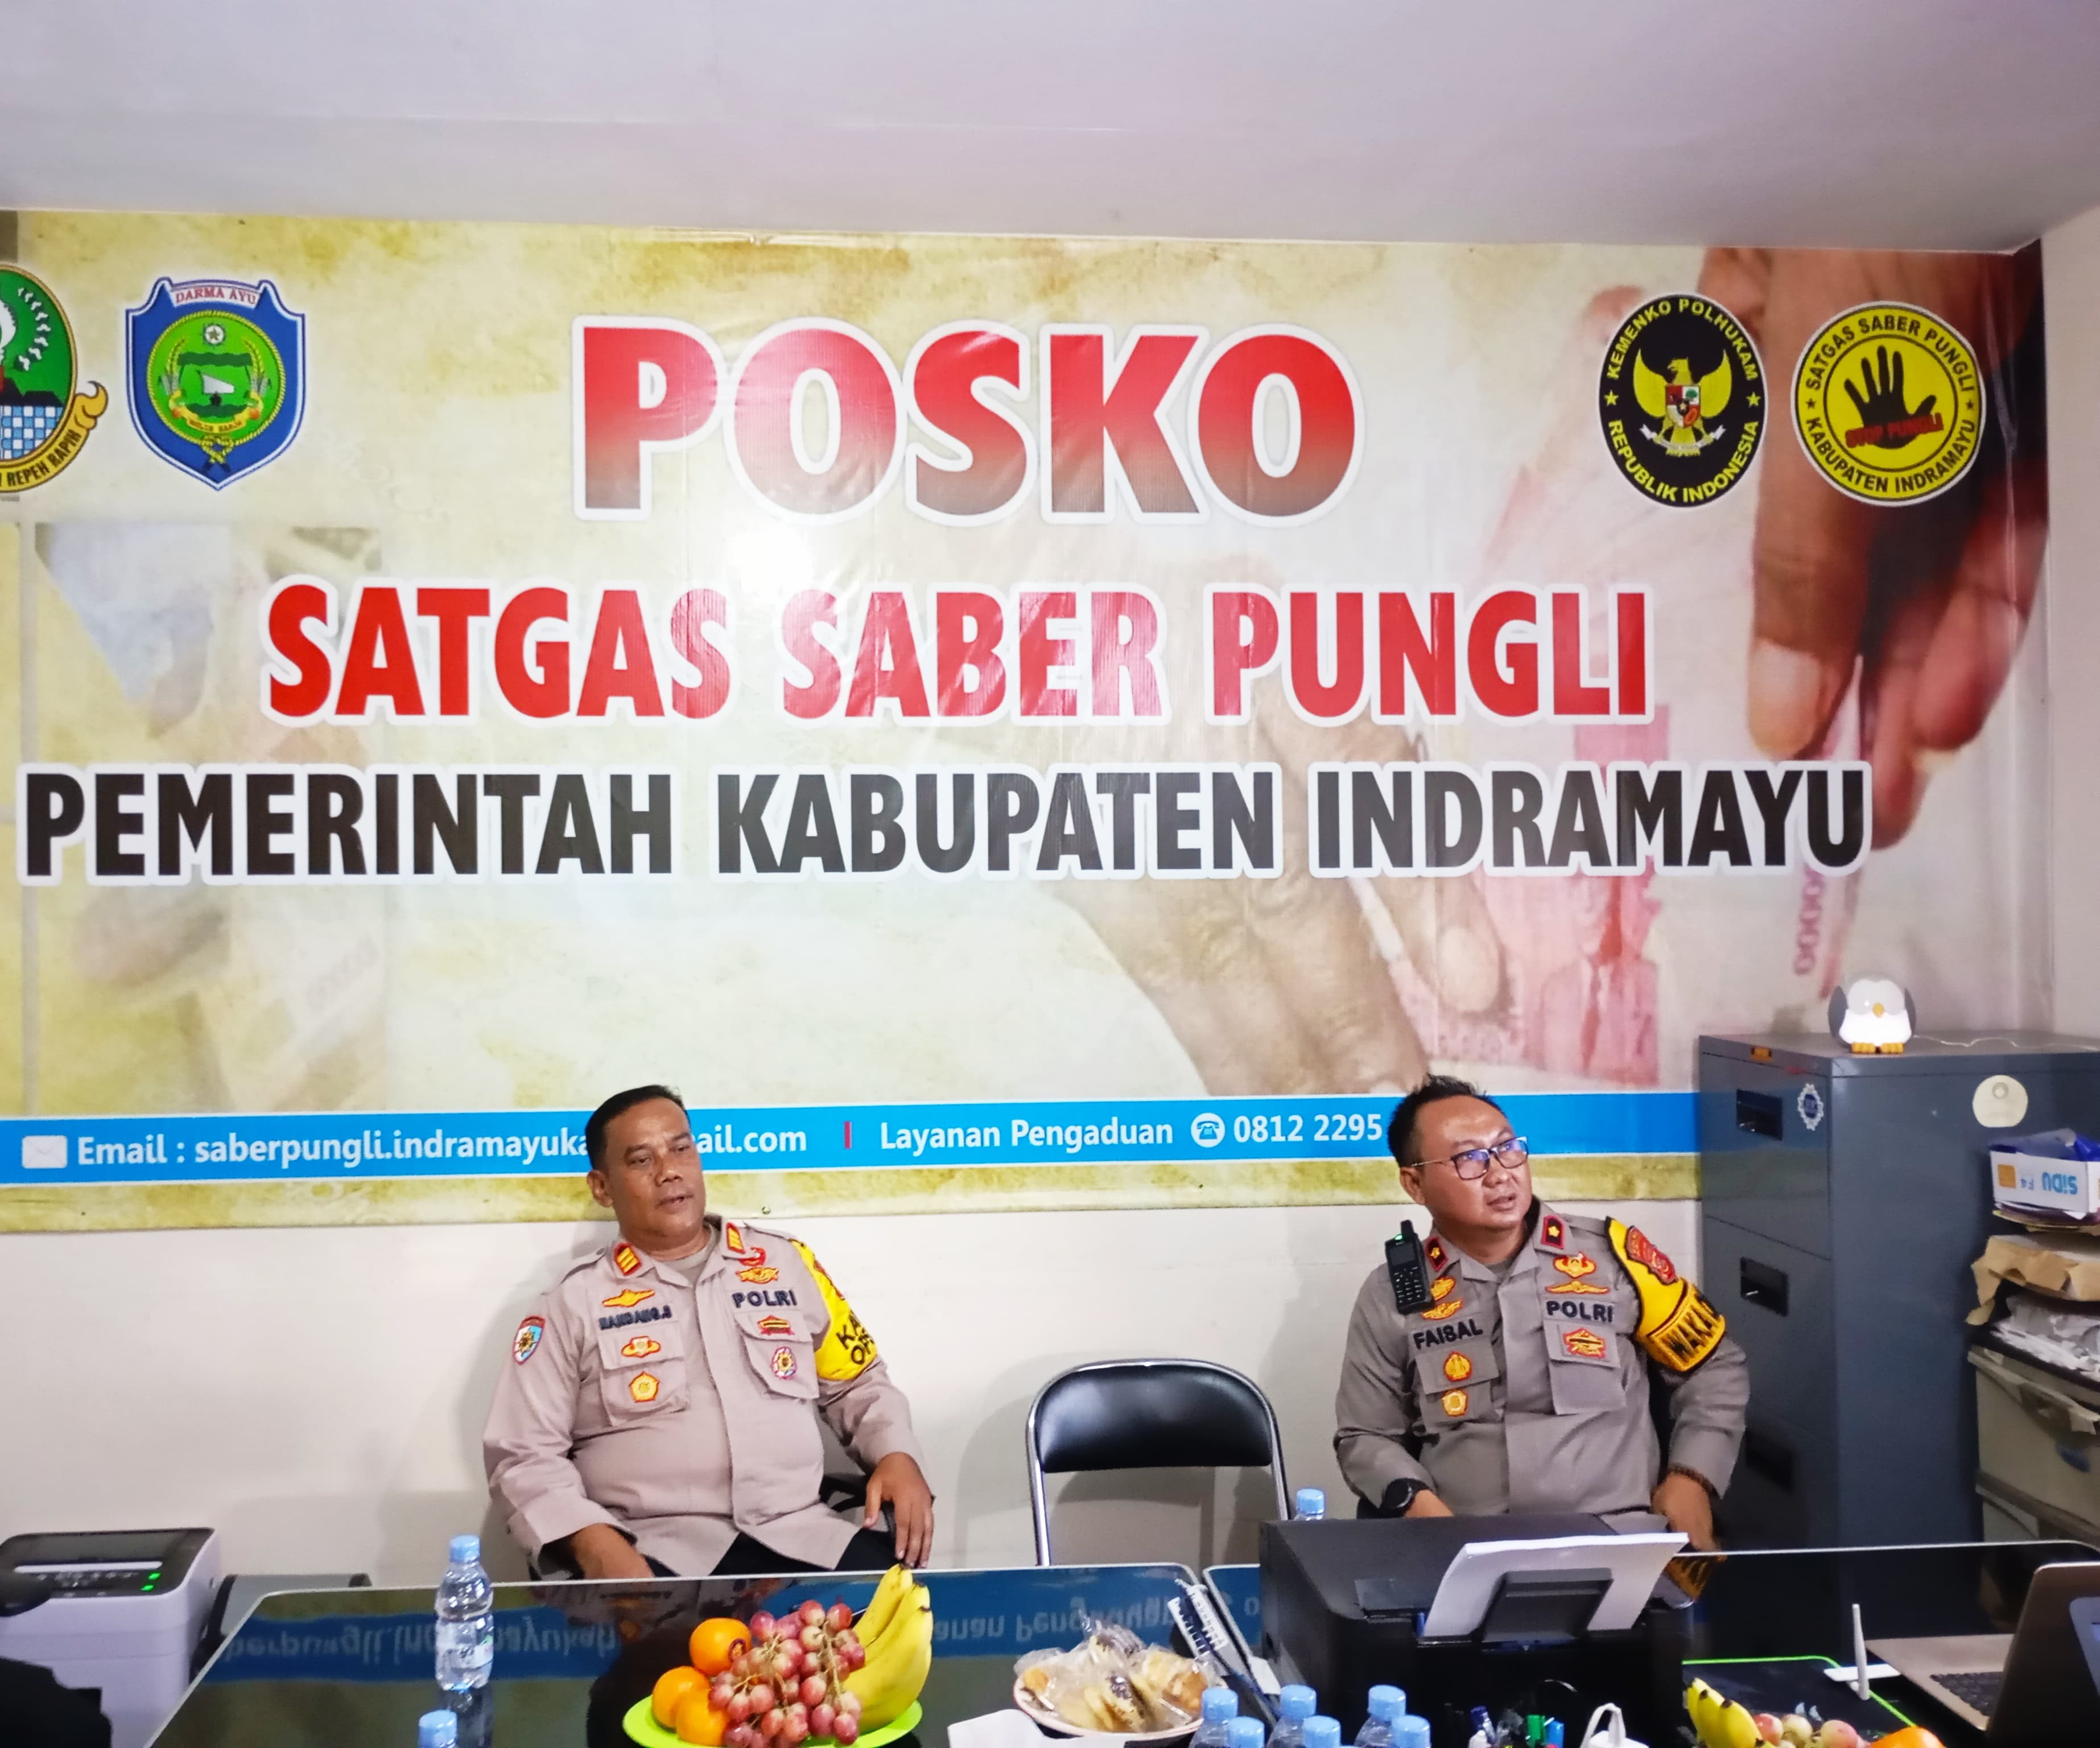 Kompol Ryan Faisal Pimpin Satgas Saber Pungli Kabupaten Indramayu